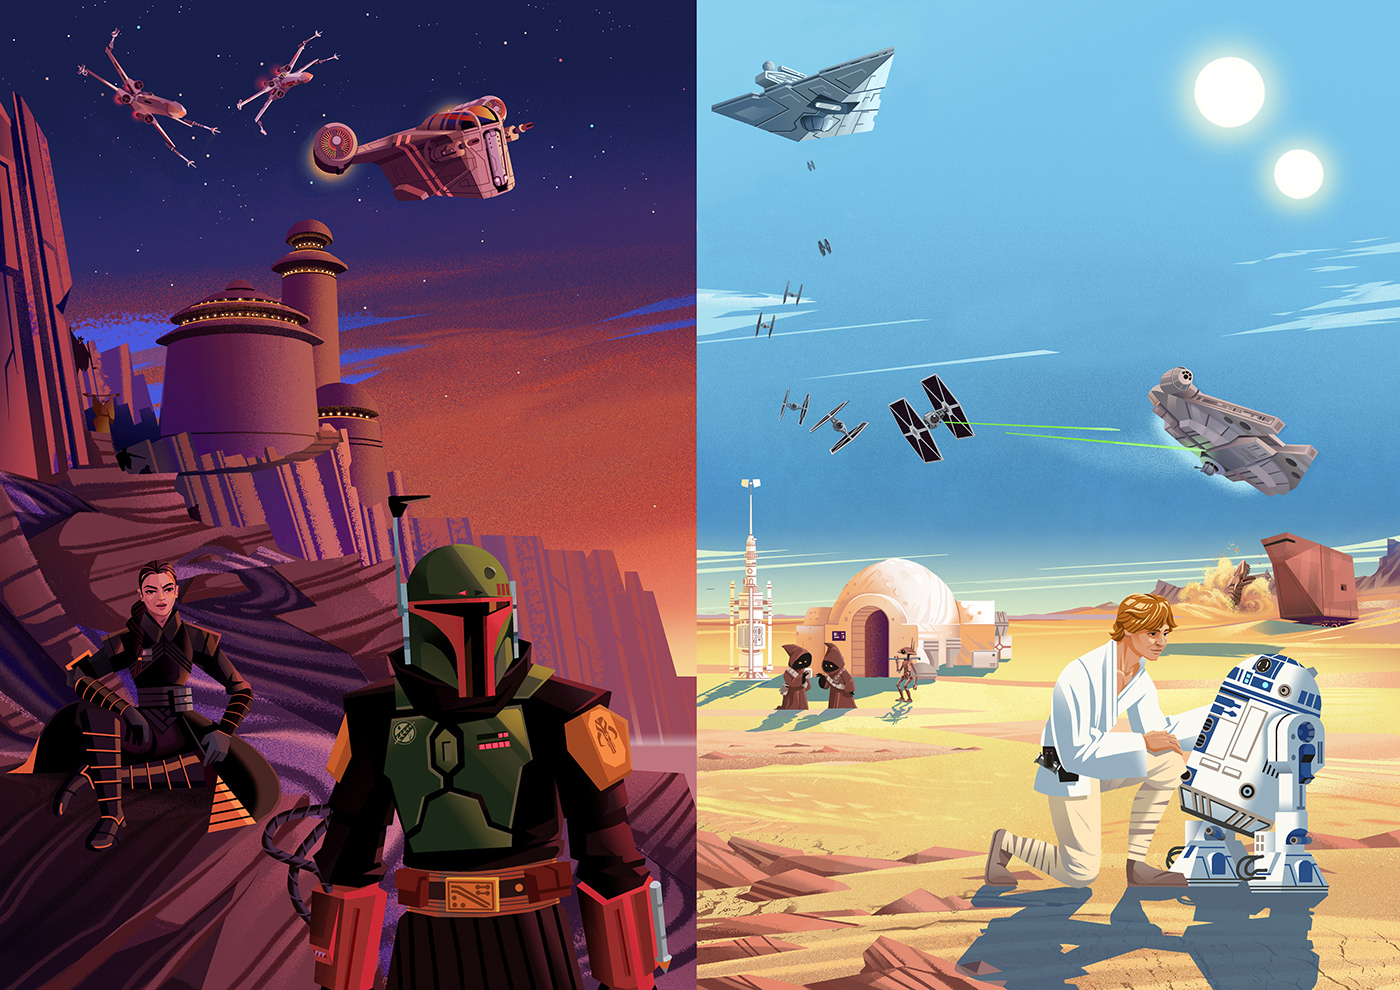 Star Wars example #56: Star Wars: Exploring Tatooine